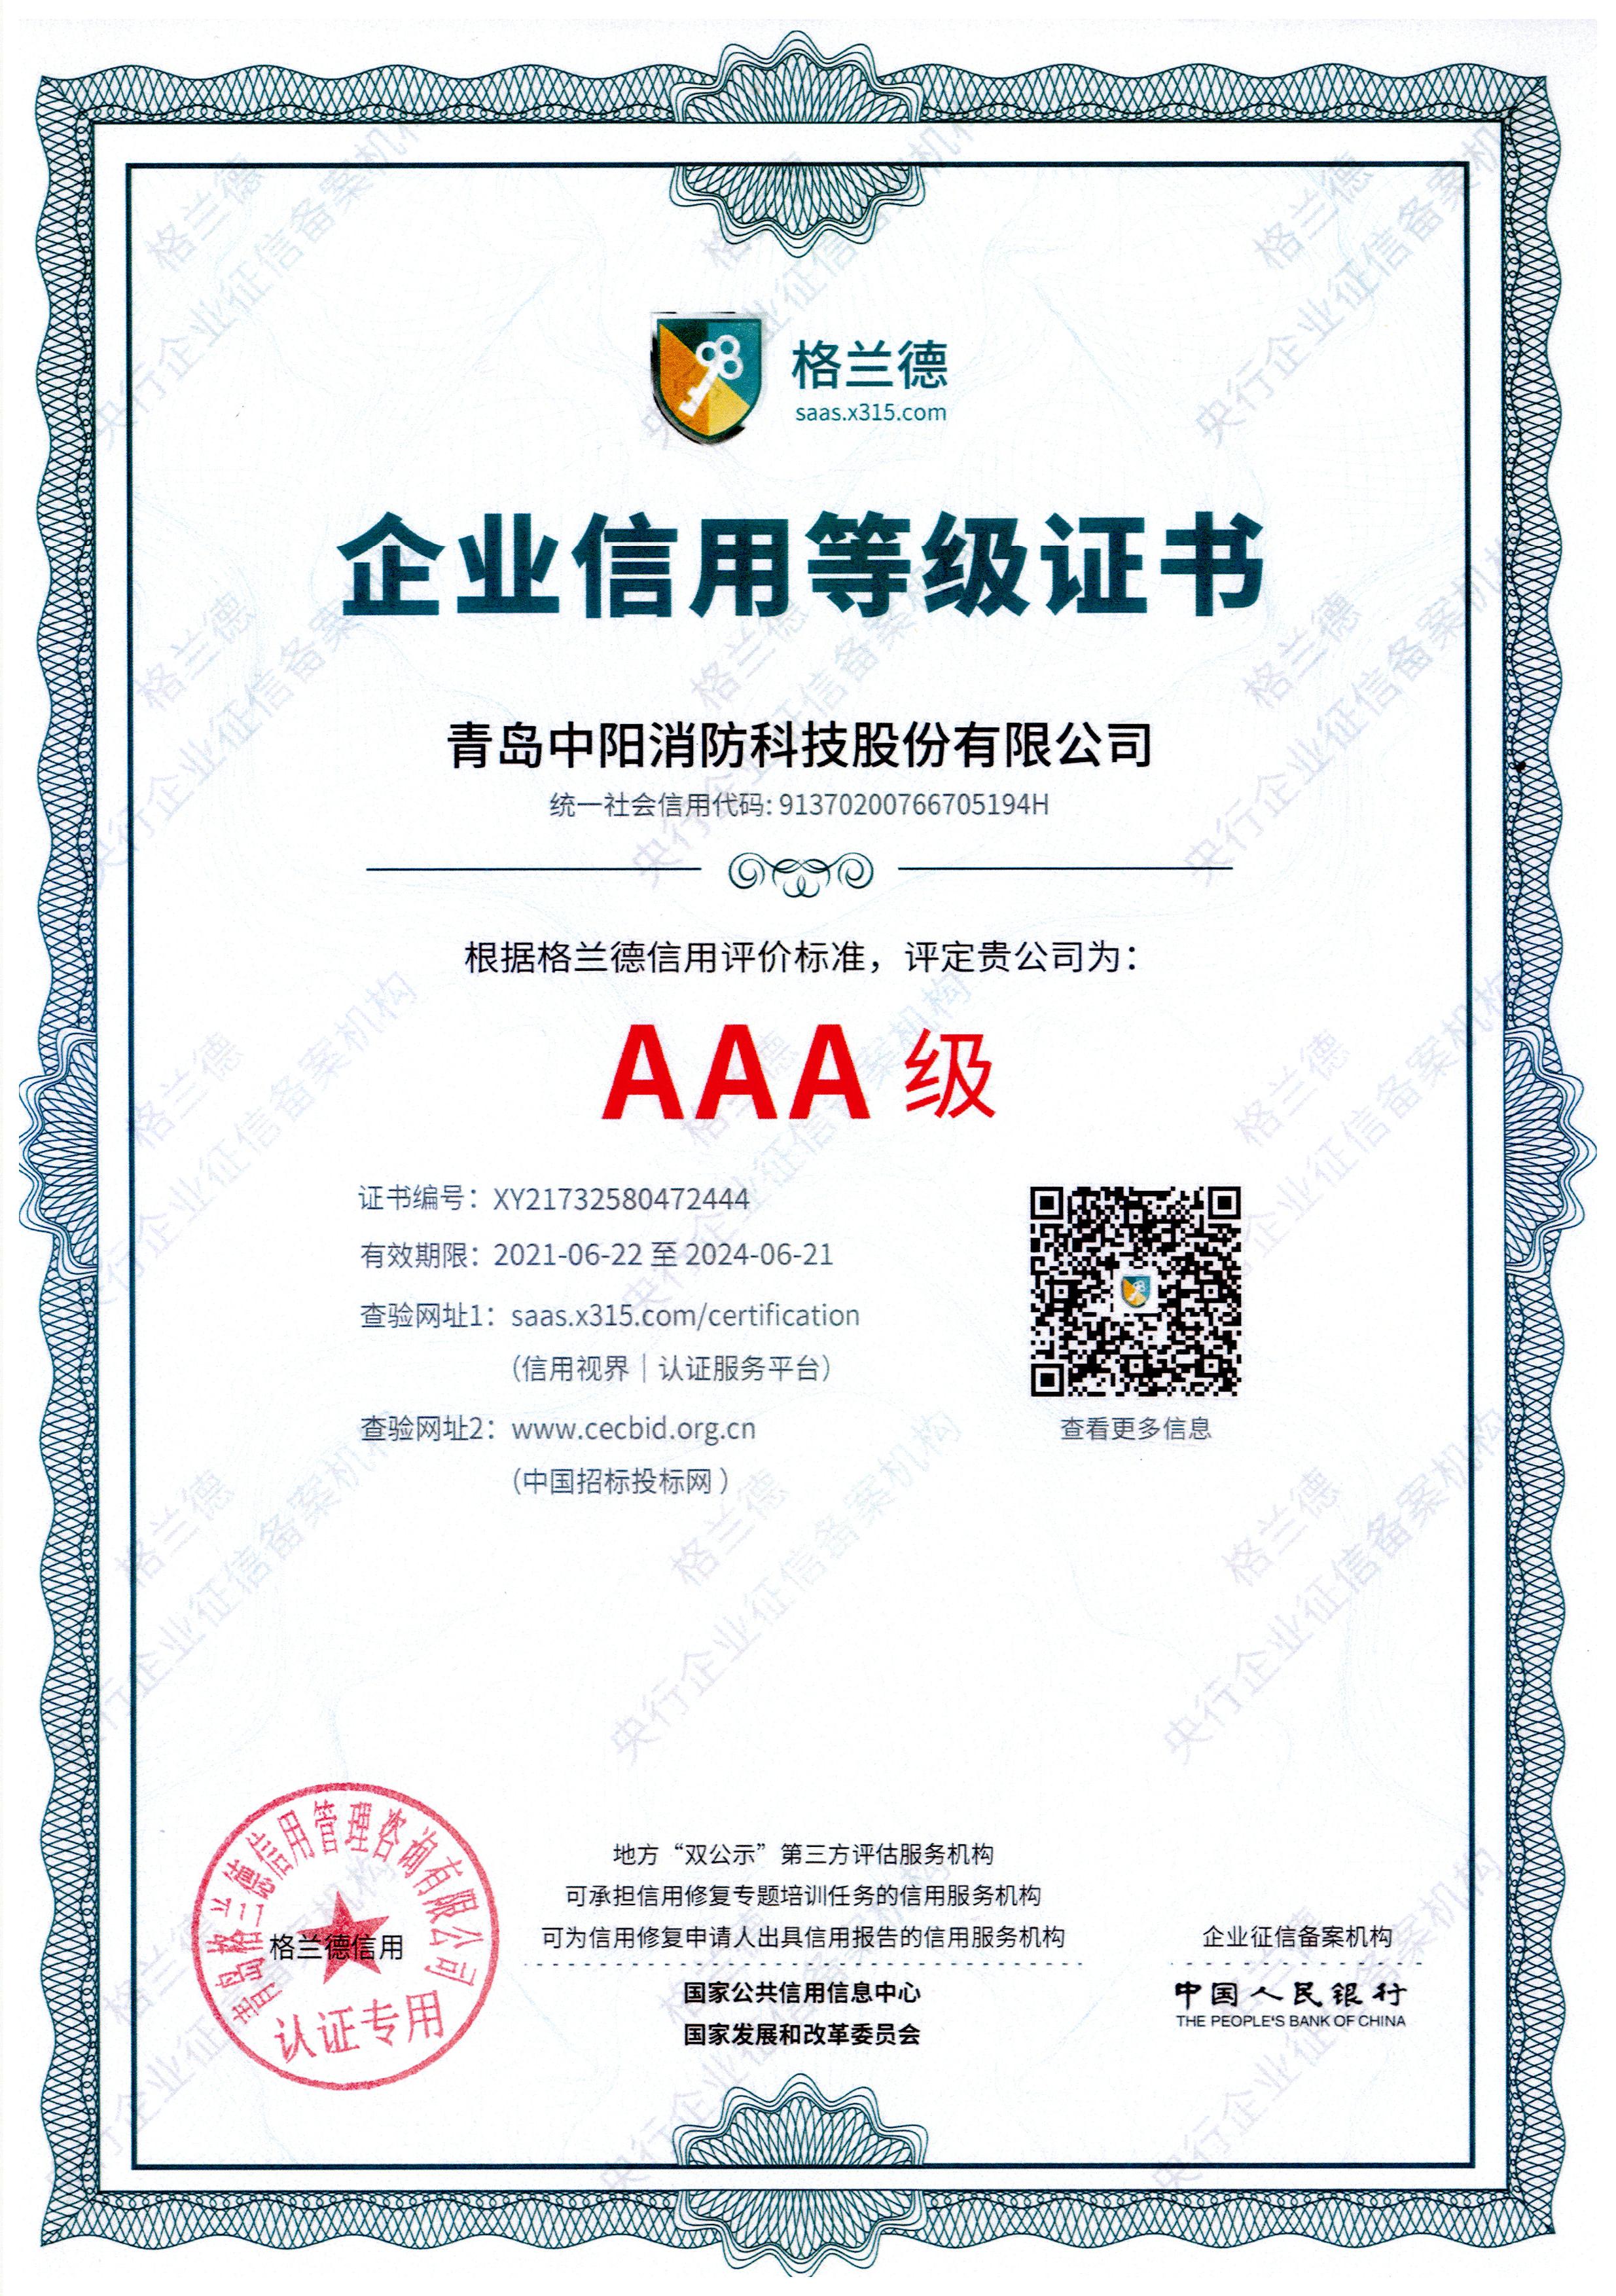 企业信用认证-AAA级